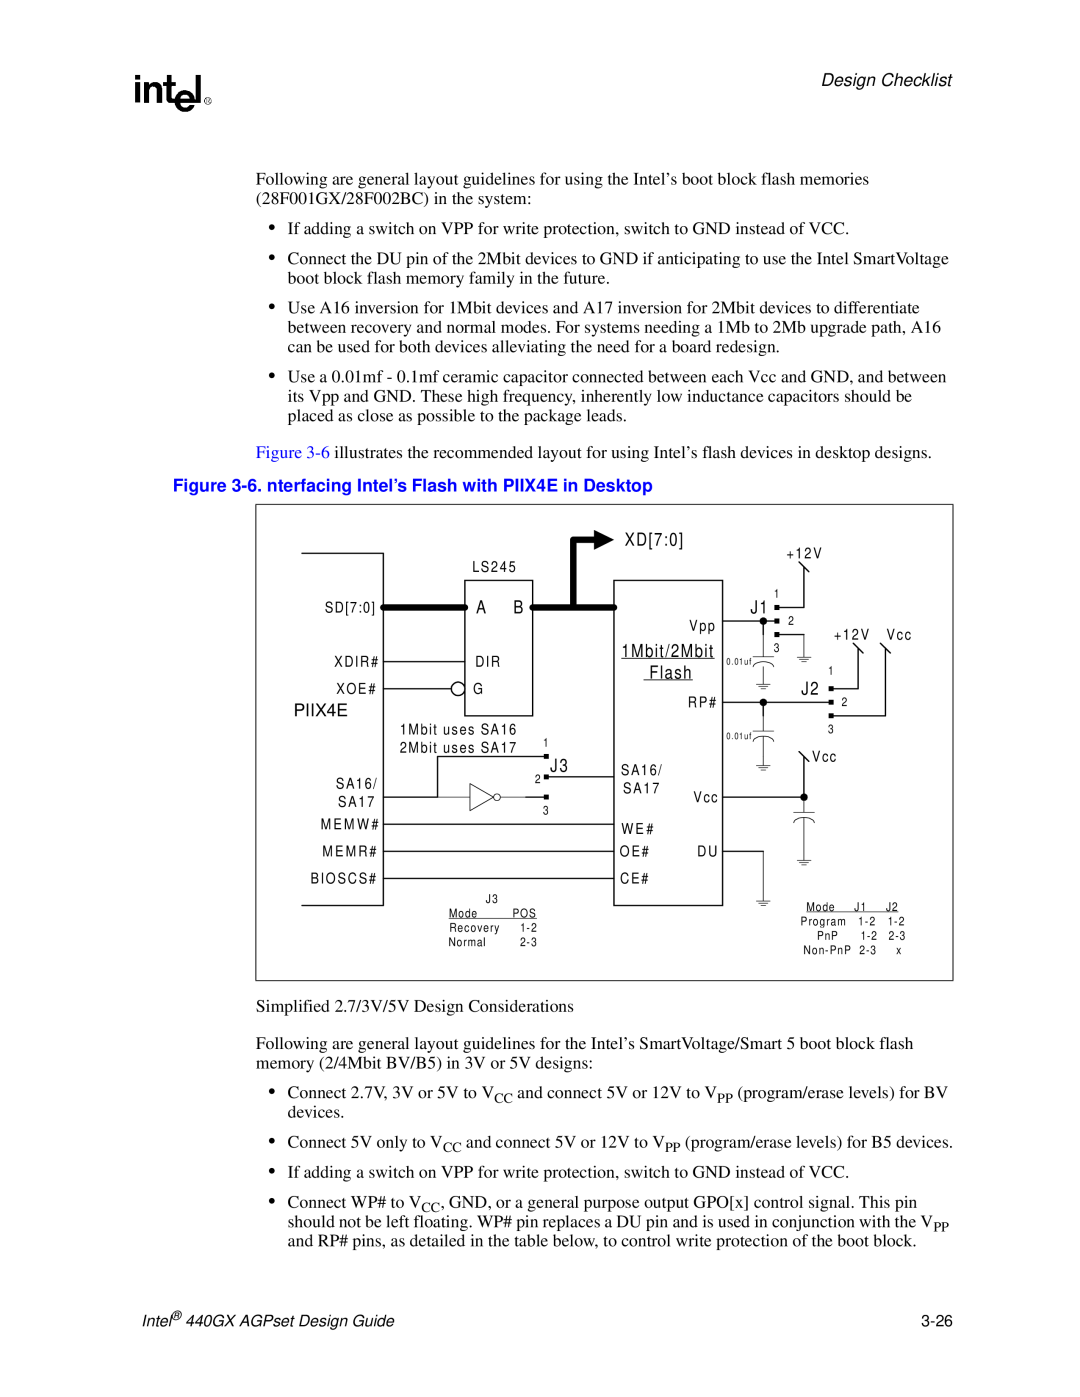 Intel 440GX manual XD70, 1Mbit/2Mbit, 6. nterfacing Intel’s Flash with PIIX4E in Desktop, Design Checklist 